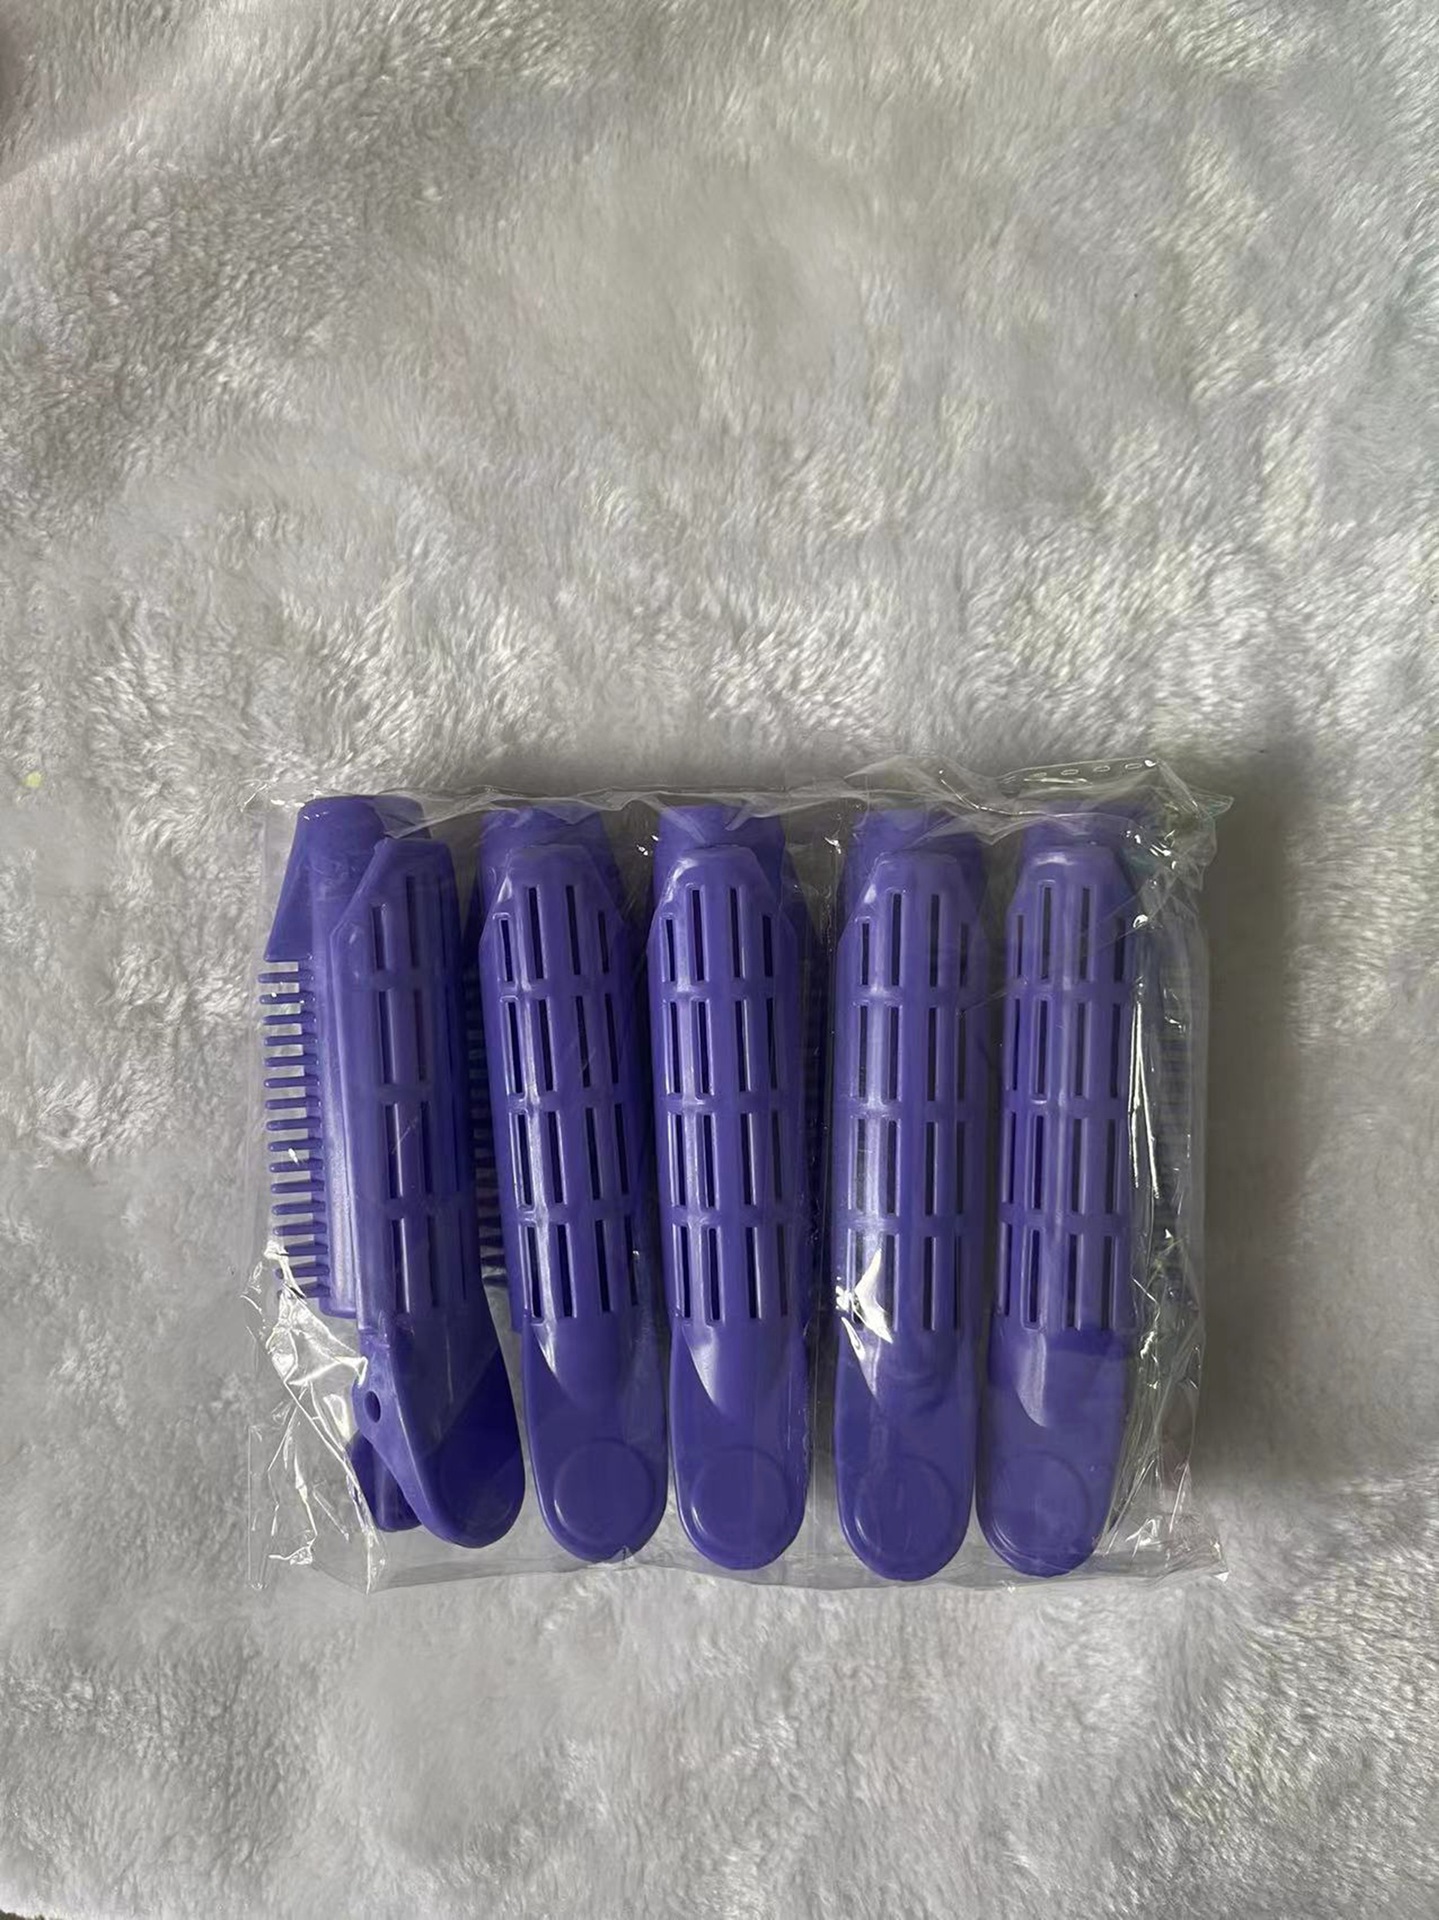 Hair Root Fluffy Clip Korean Hairpin Bangs Fixing Clip Styling Pin Top Hair Padding Natural Hair Curlers Shaping Clip